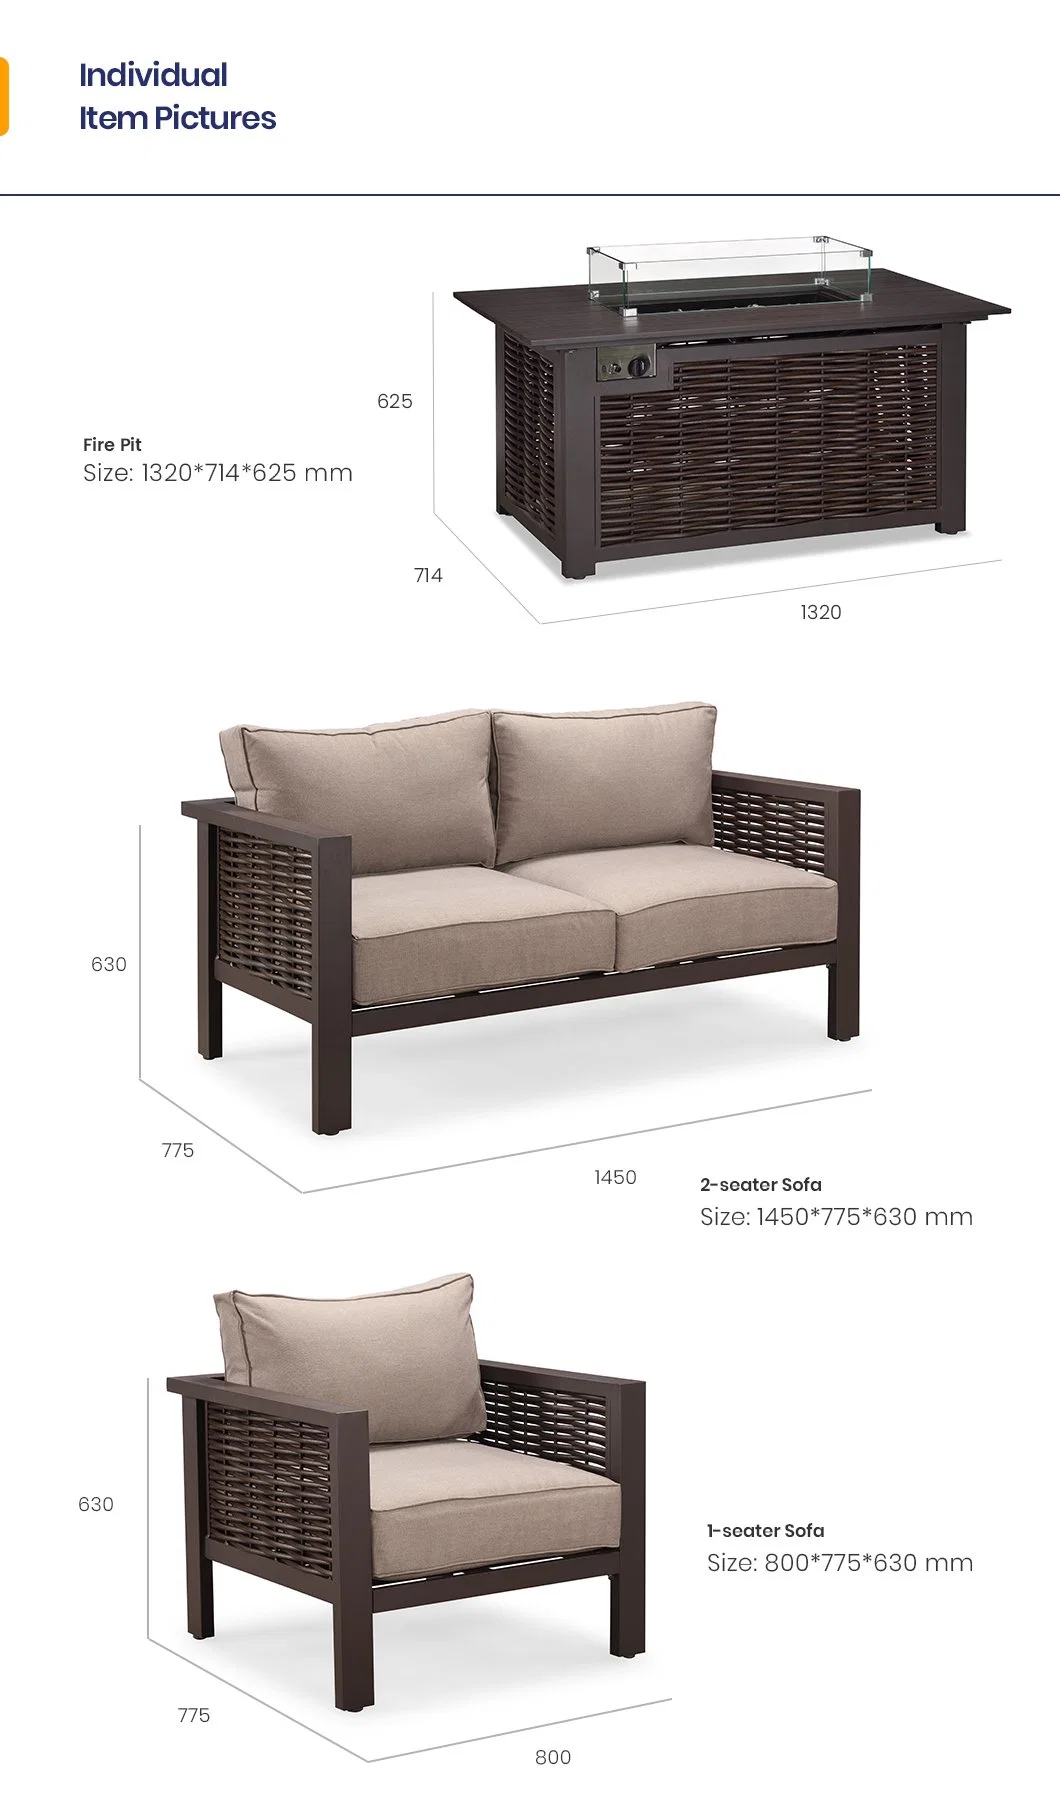 Patio Furniture Convenience Design Aluminum Kd Garden Fire Pit Set with Rattan Sofa